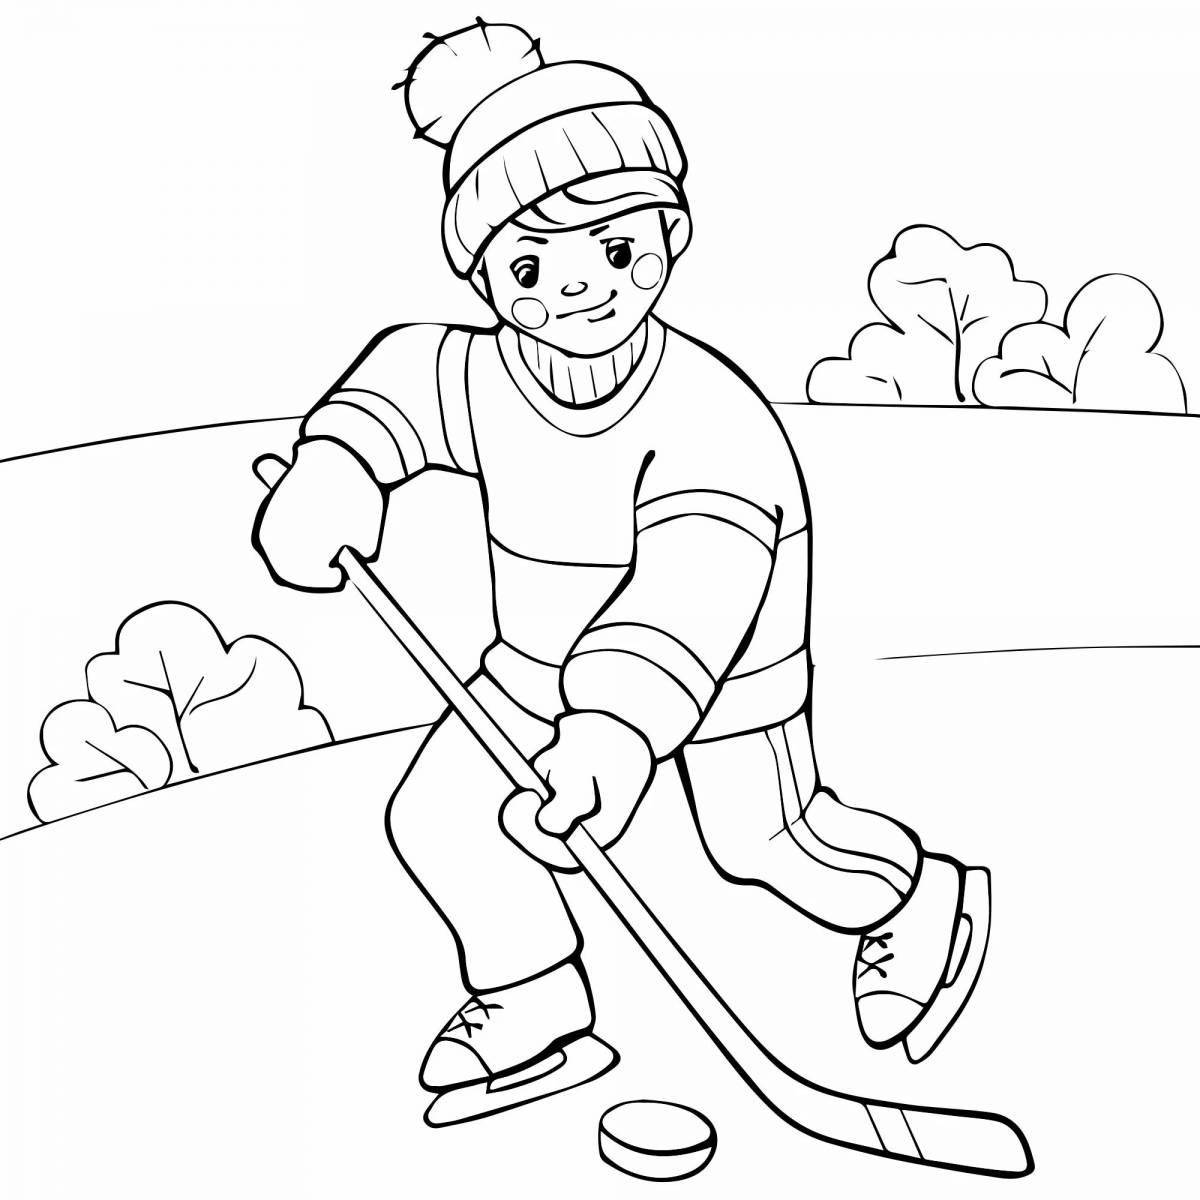 Winter sports #3